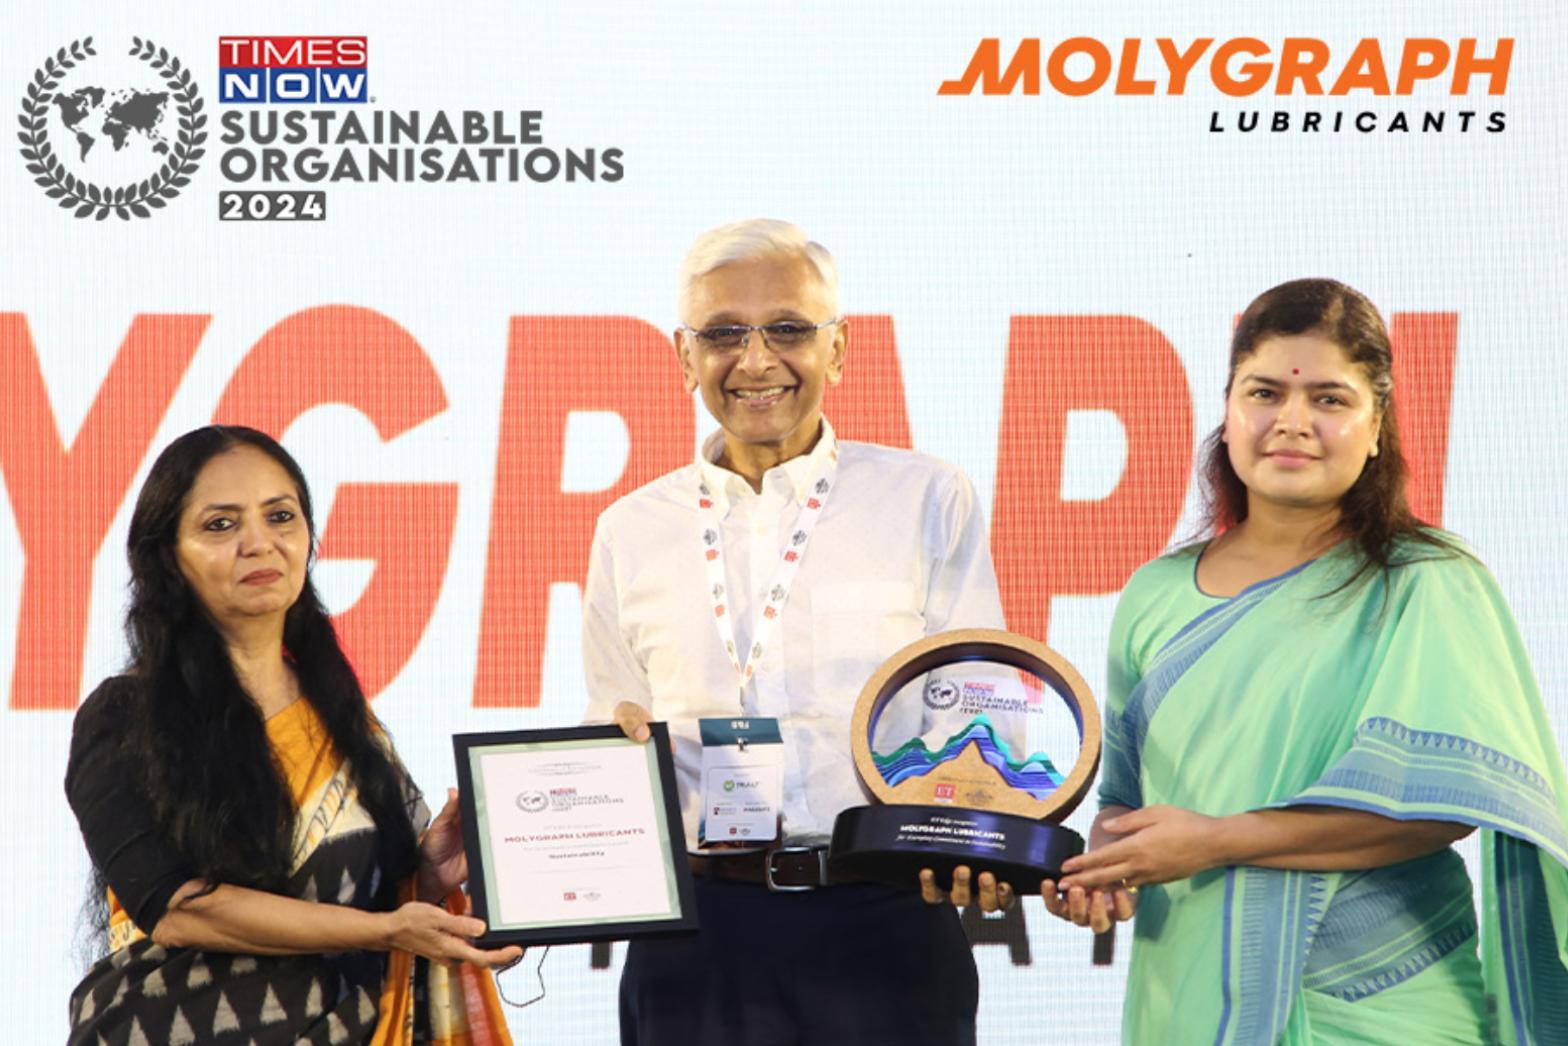 Molygraph Lubricants Wins Prestigious ‘TIMES NOW Sustainable Organization’ Award 2024